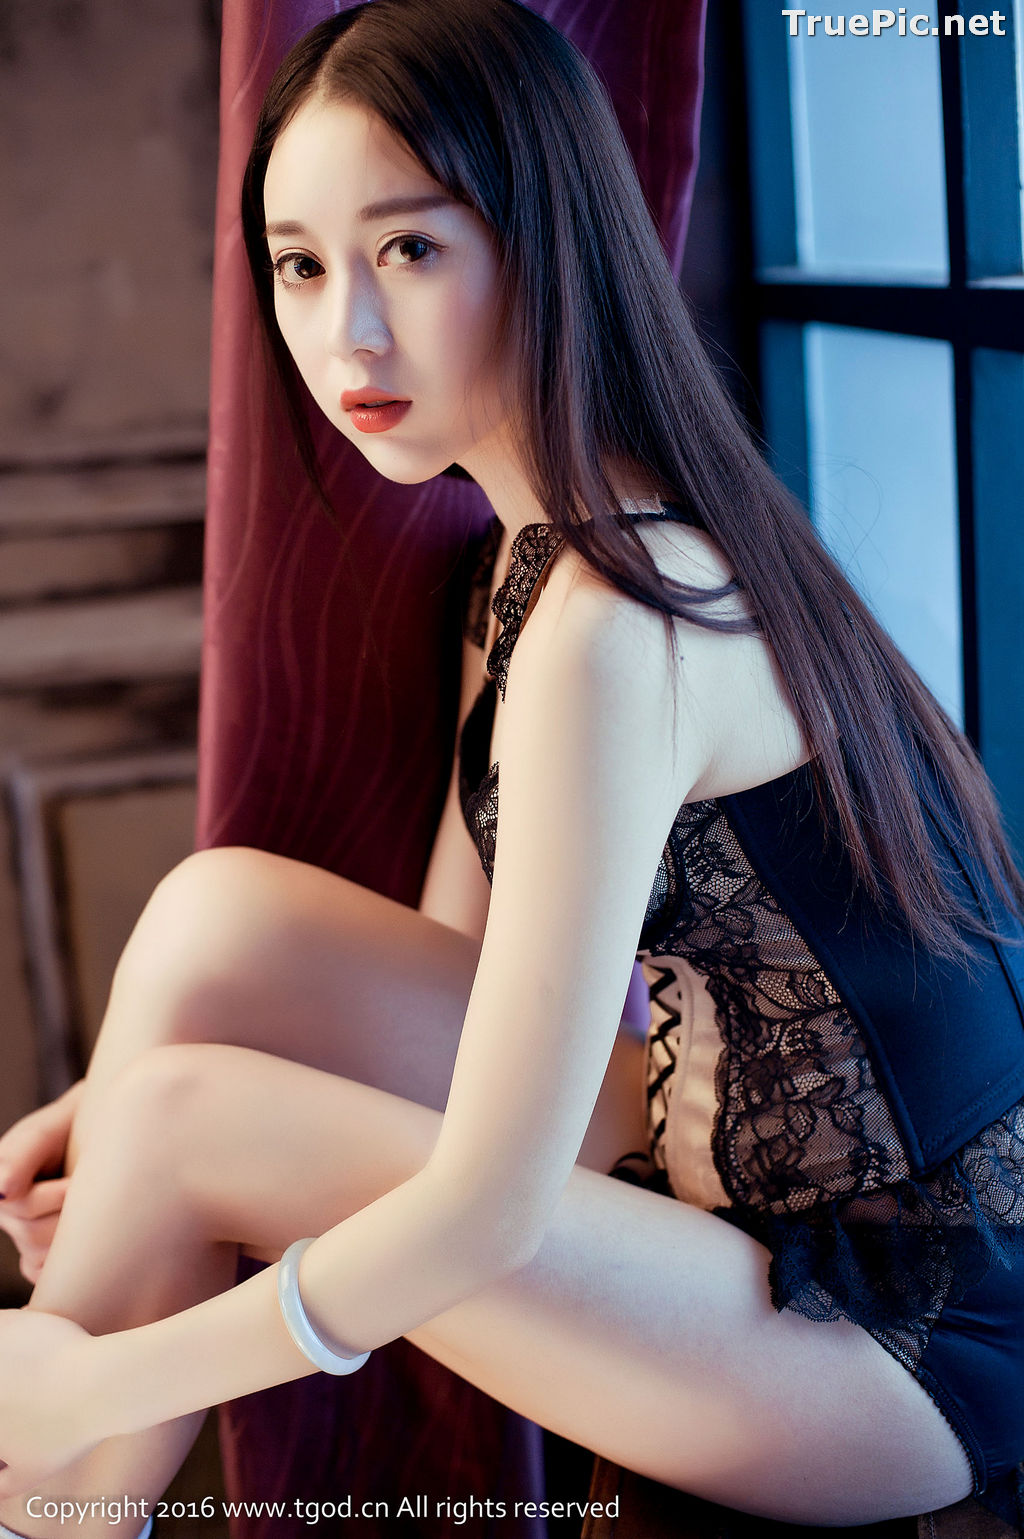 Image TGOD Photo Album – Chinese Model - Kitty Zhao Xiaomi (赵小米) - TruePic.net - Picture-74